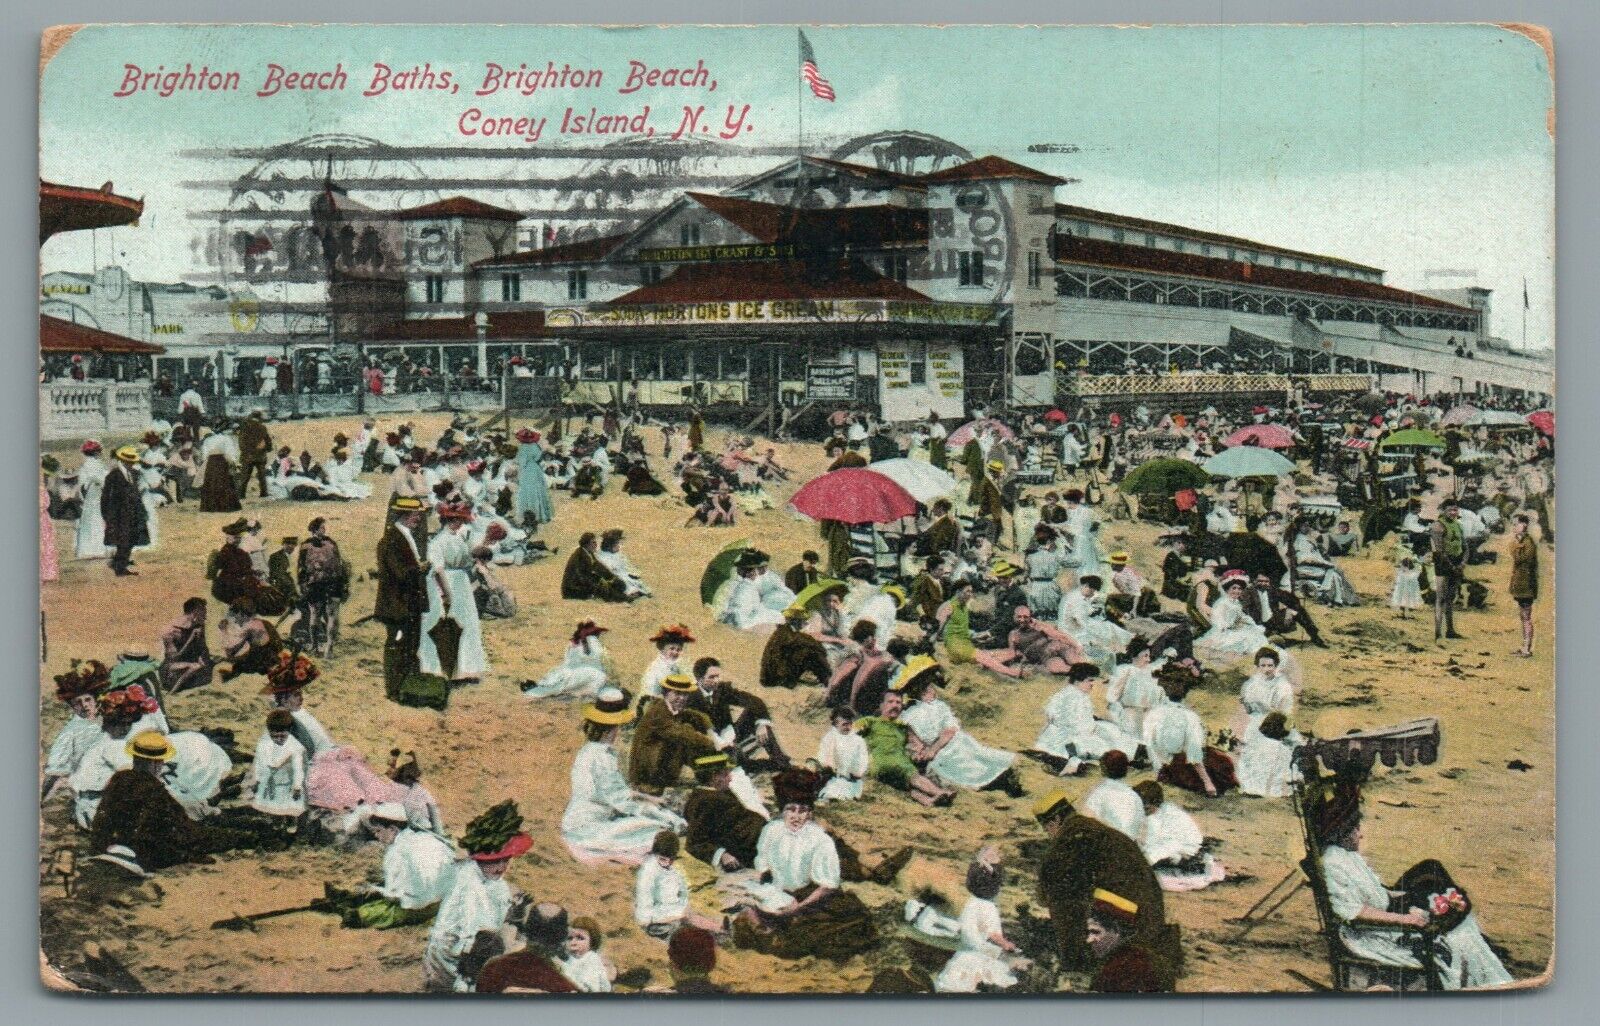 Brighton Beach Baths Brighton Beach Coney Island NY Vintage Postcard Posted 1910